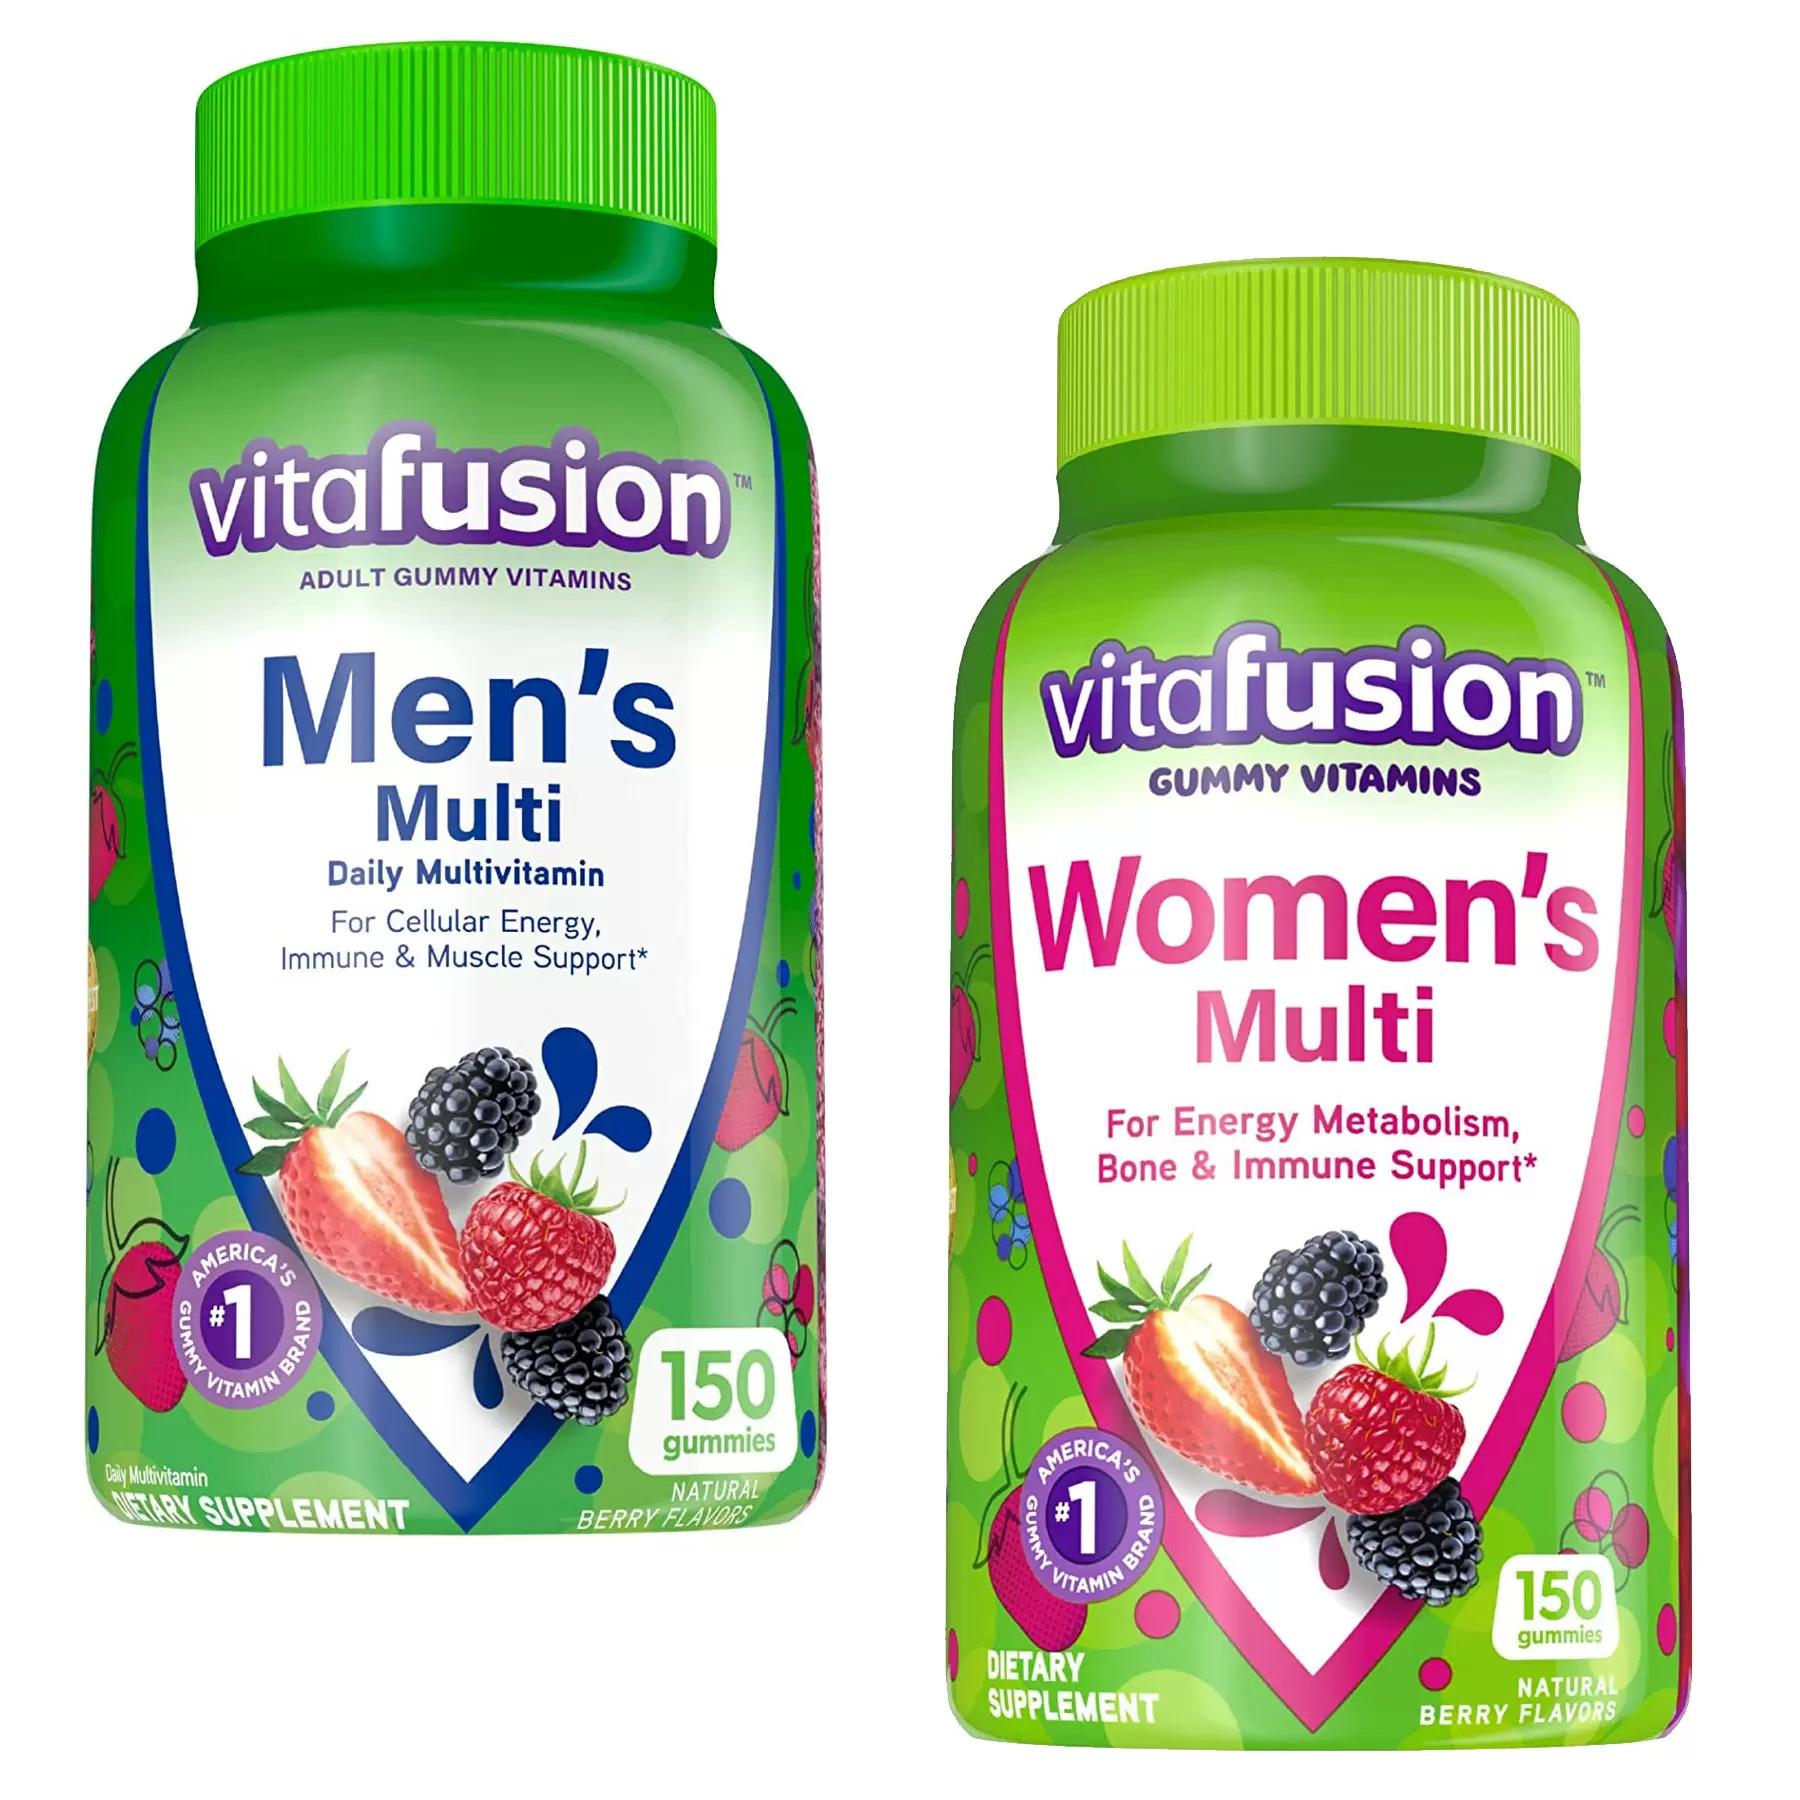 Vitafusion Multivitamins Gummy Vitamins for $6.53 Shipped